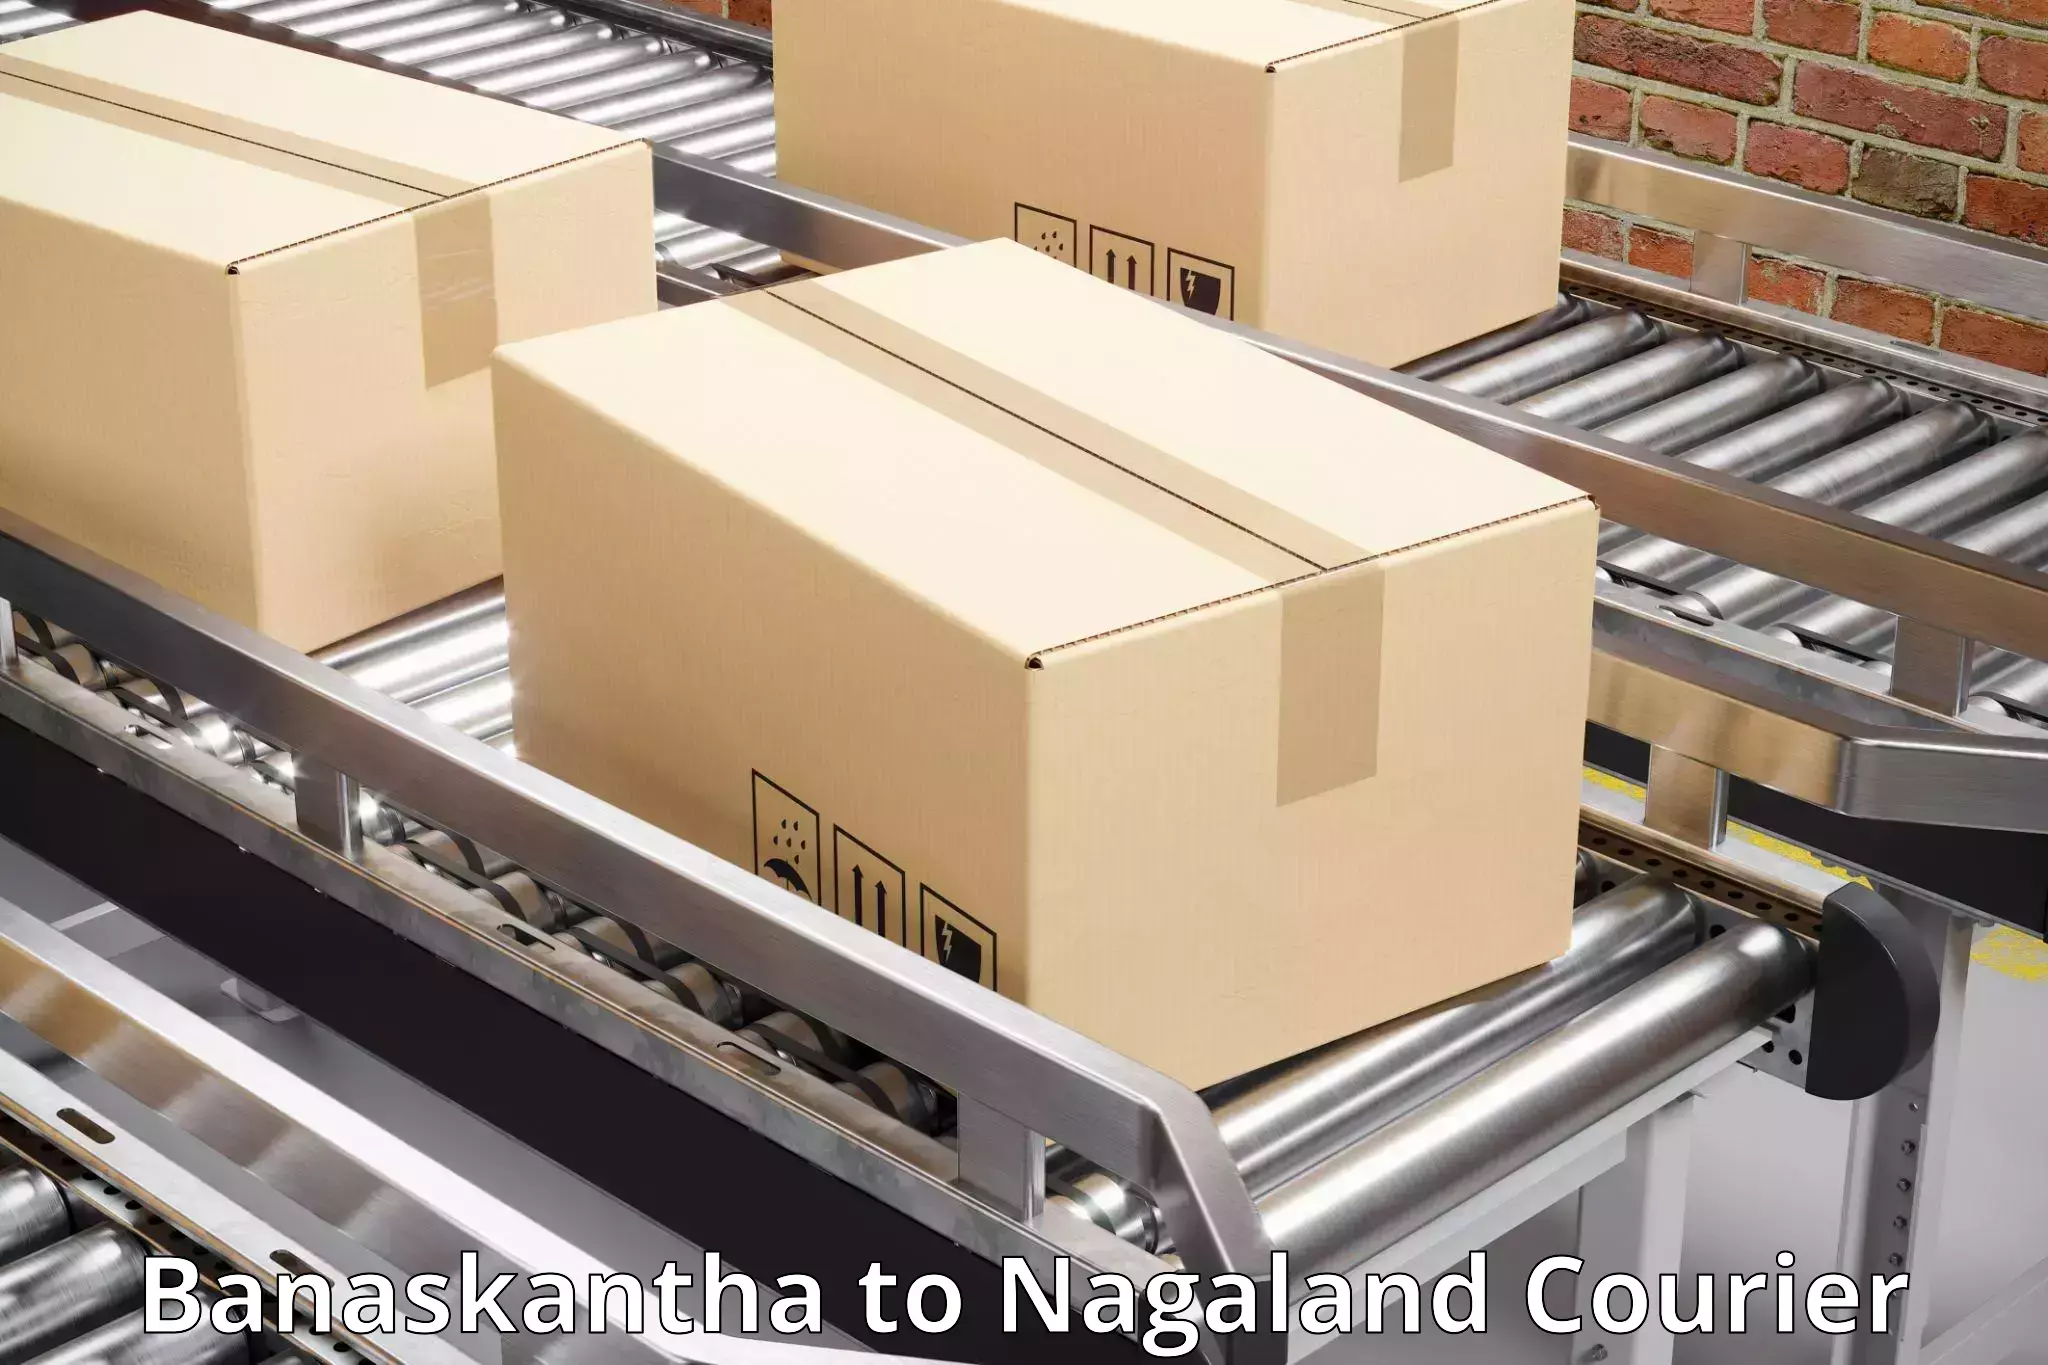 Full-service courier options Banaskantha to Mon